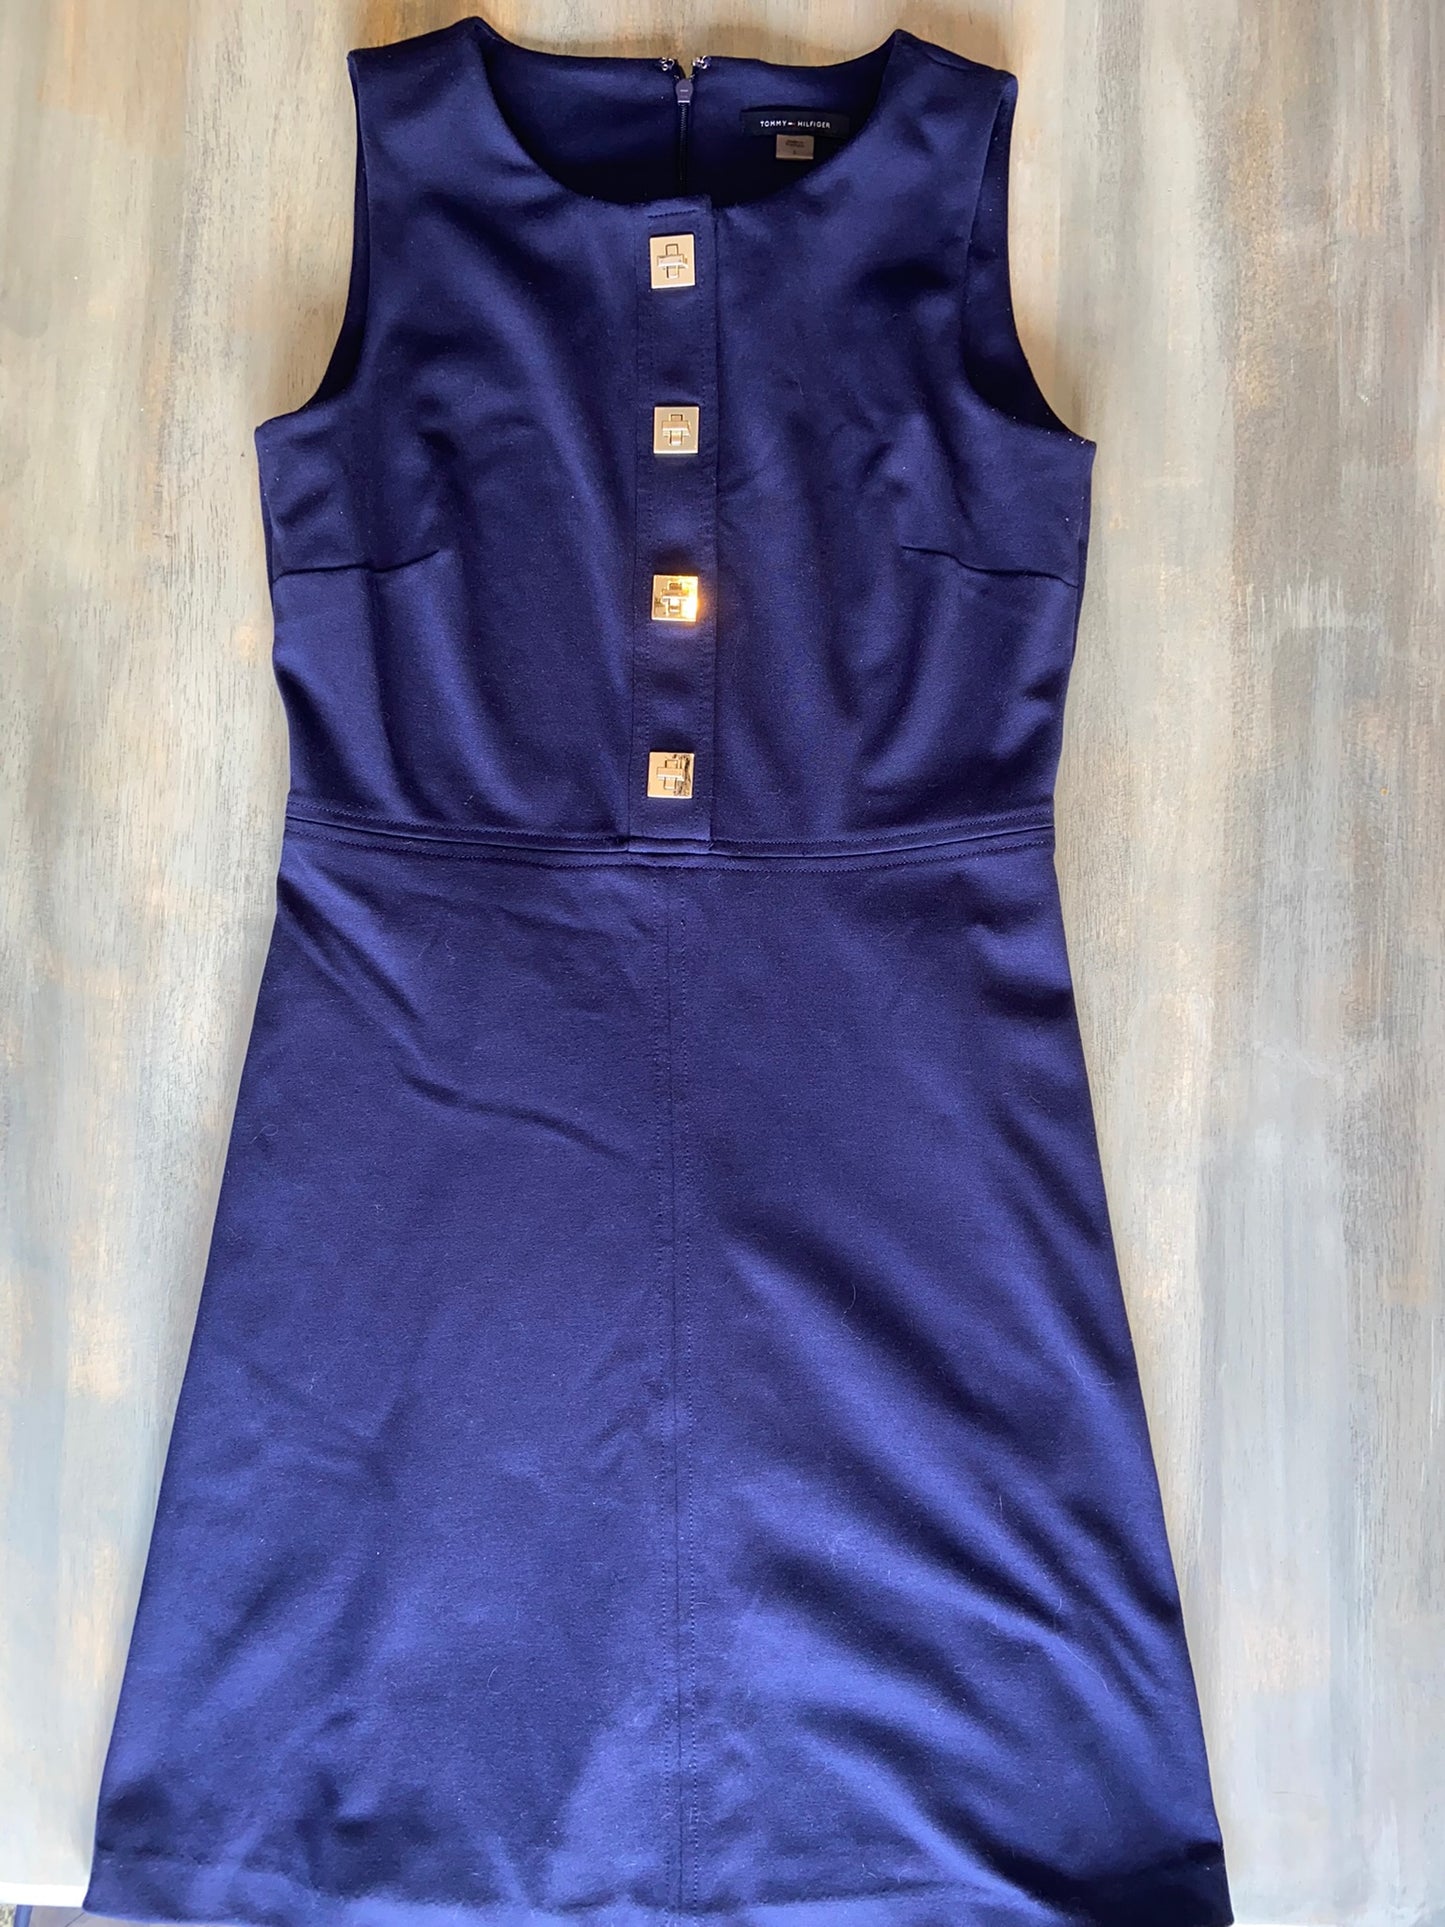 Women's Tommy Hilfiger dress, size 6